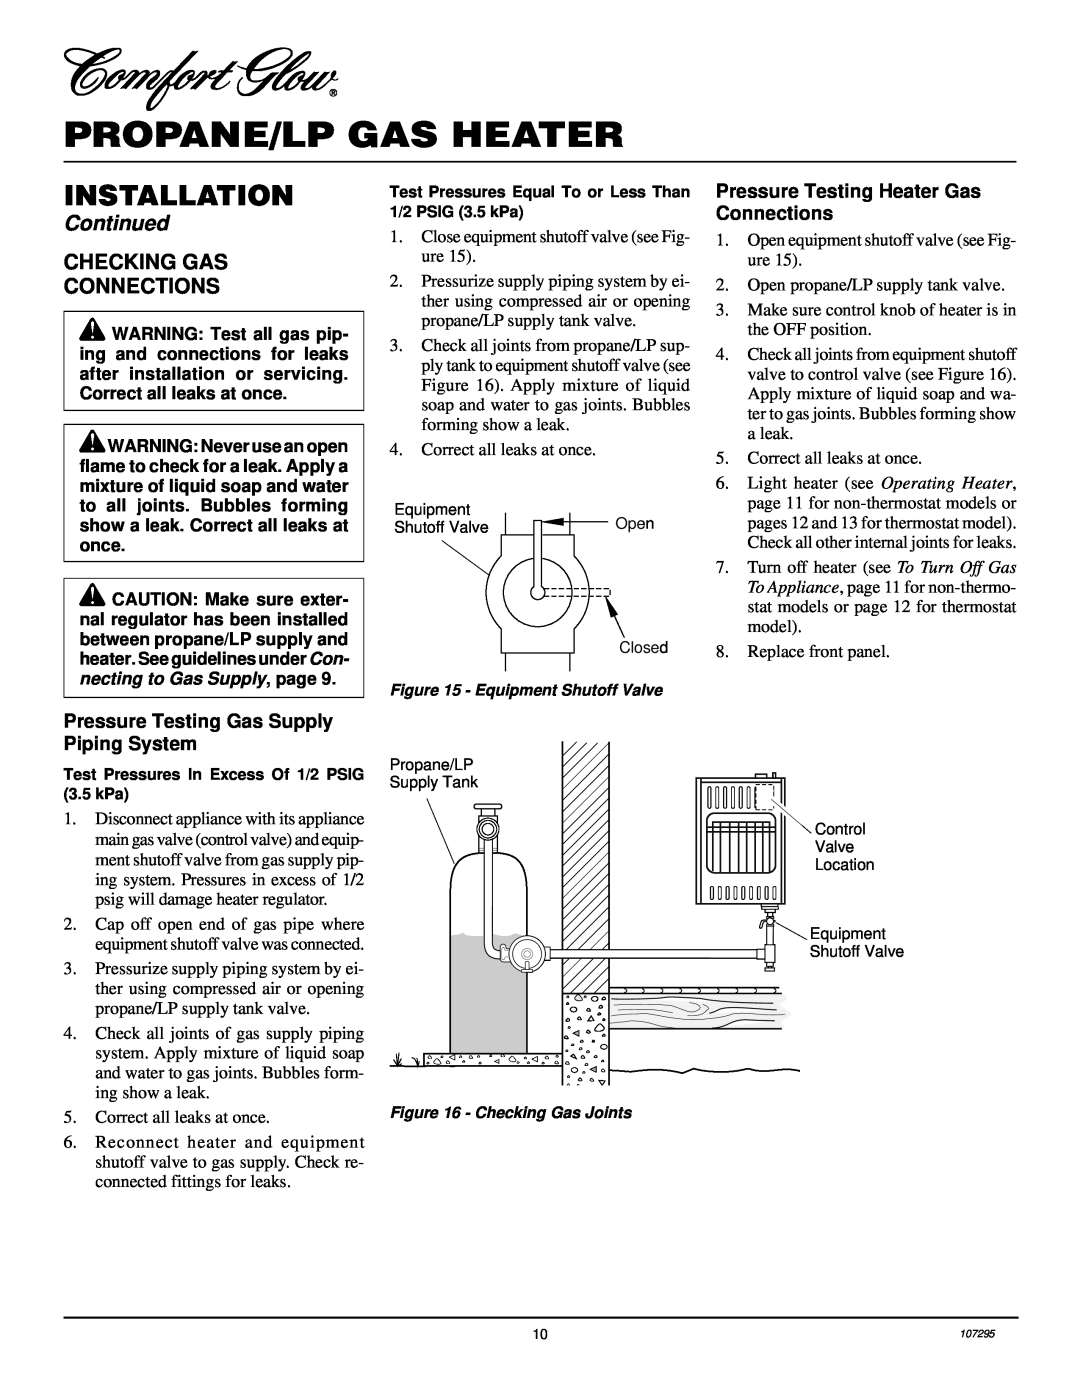 Desa CG6P, CGS10P, CG10P installation manual Checking Gas Connections, Propane/Lp Gas Heater, Installation, Continued 